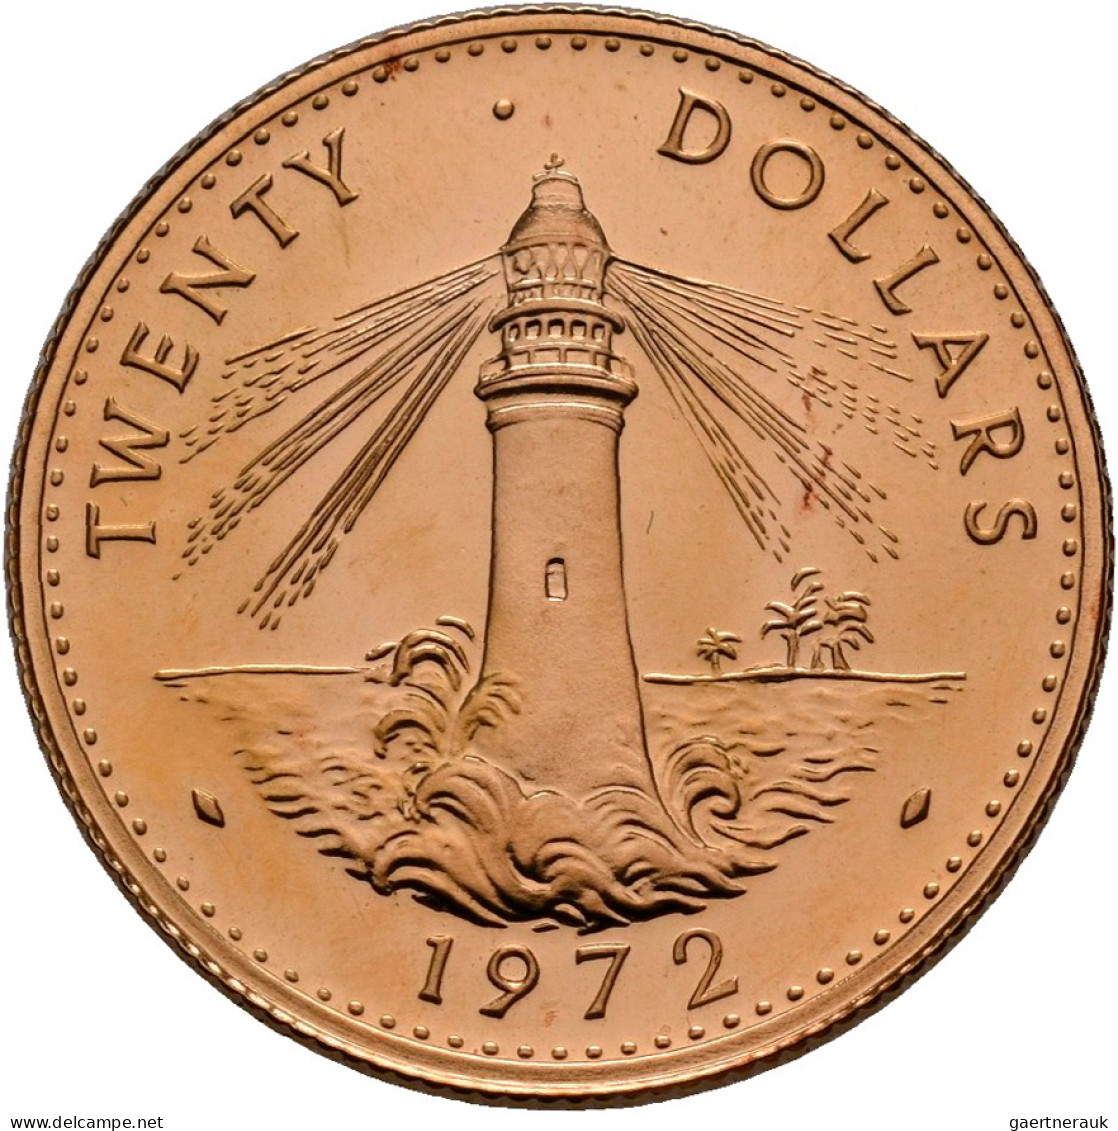 Bahamas - Anlagegold: Gold-Set 1972 mit 4 Goldmünzen: 100 Dollars, 50 Dollars, 2